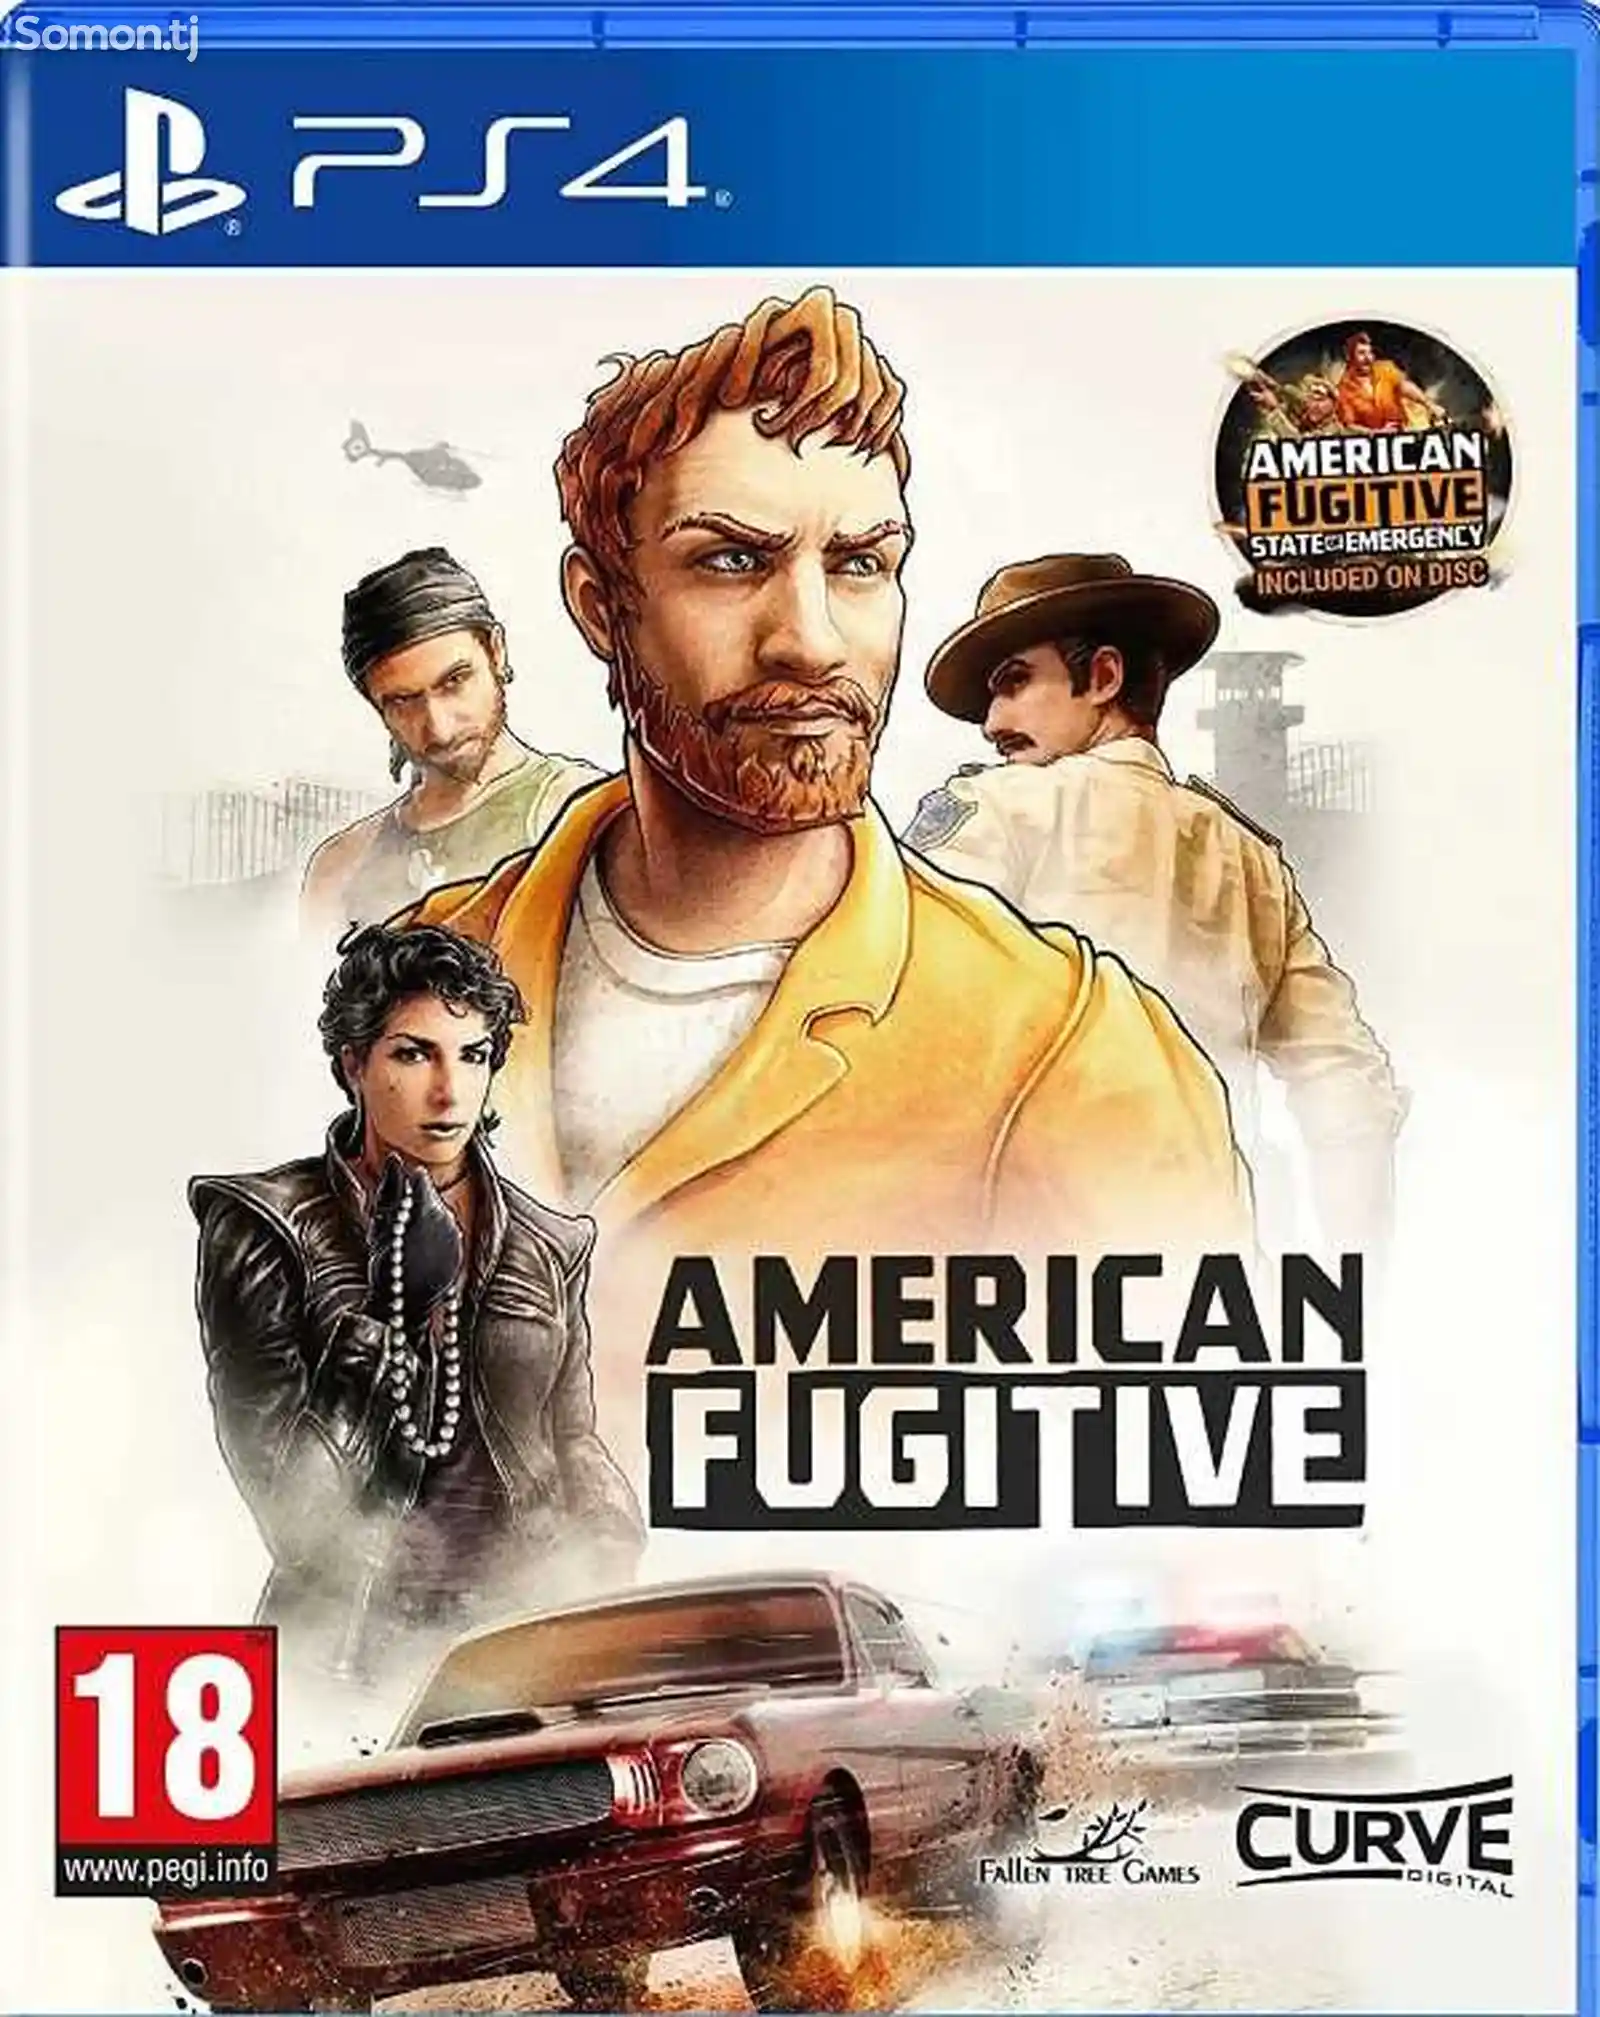 Игра American fugitive для PS-4 / 5.05 / 6.72 / 7.02 / 7.55 / 9.00 /-1